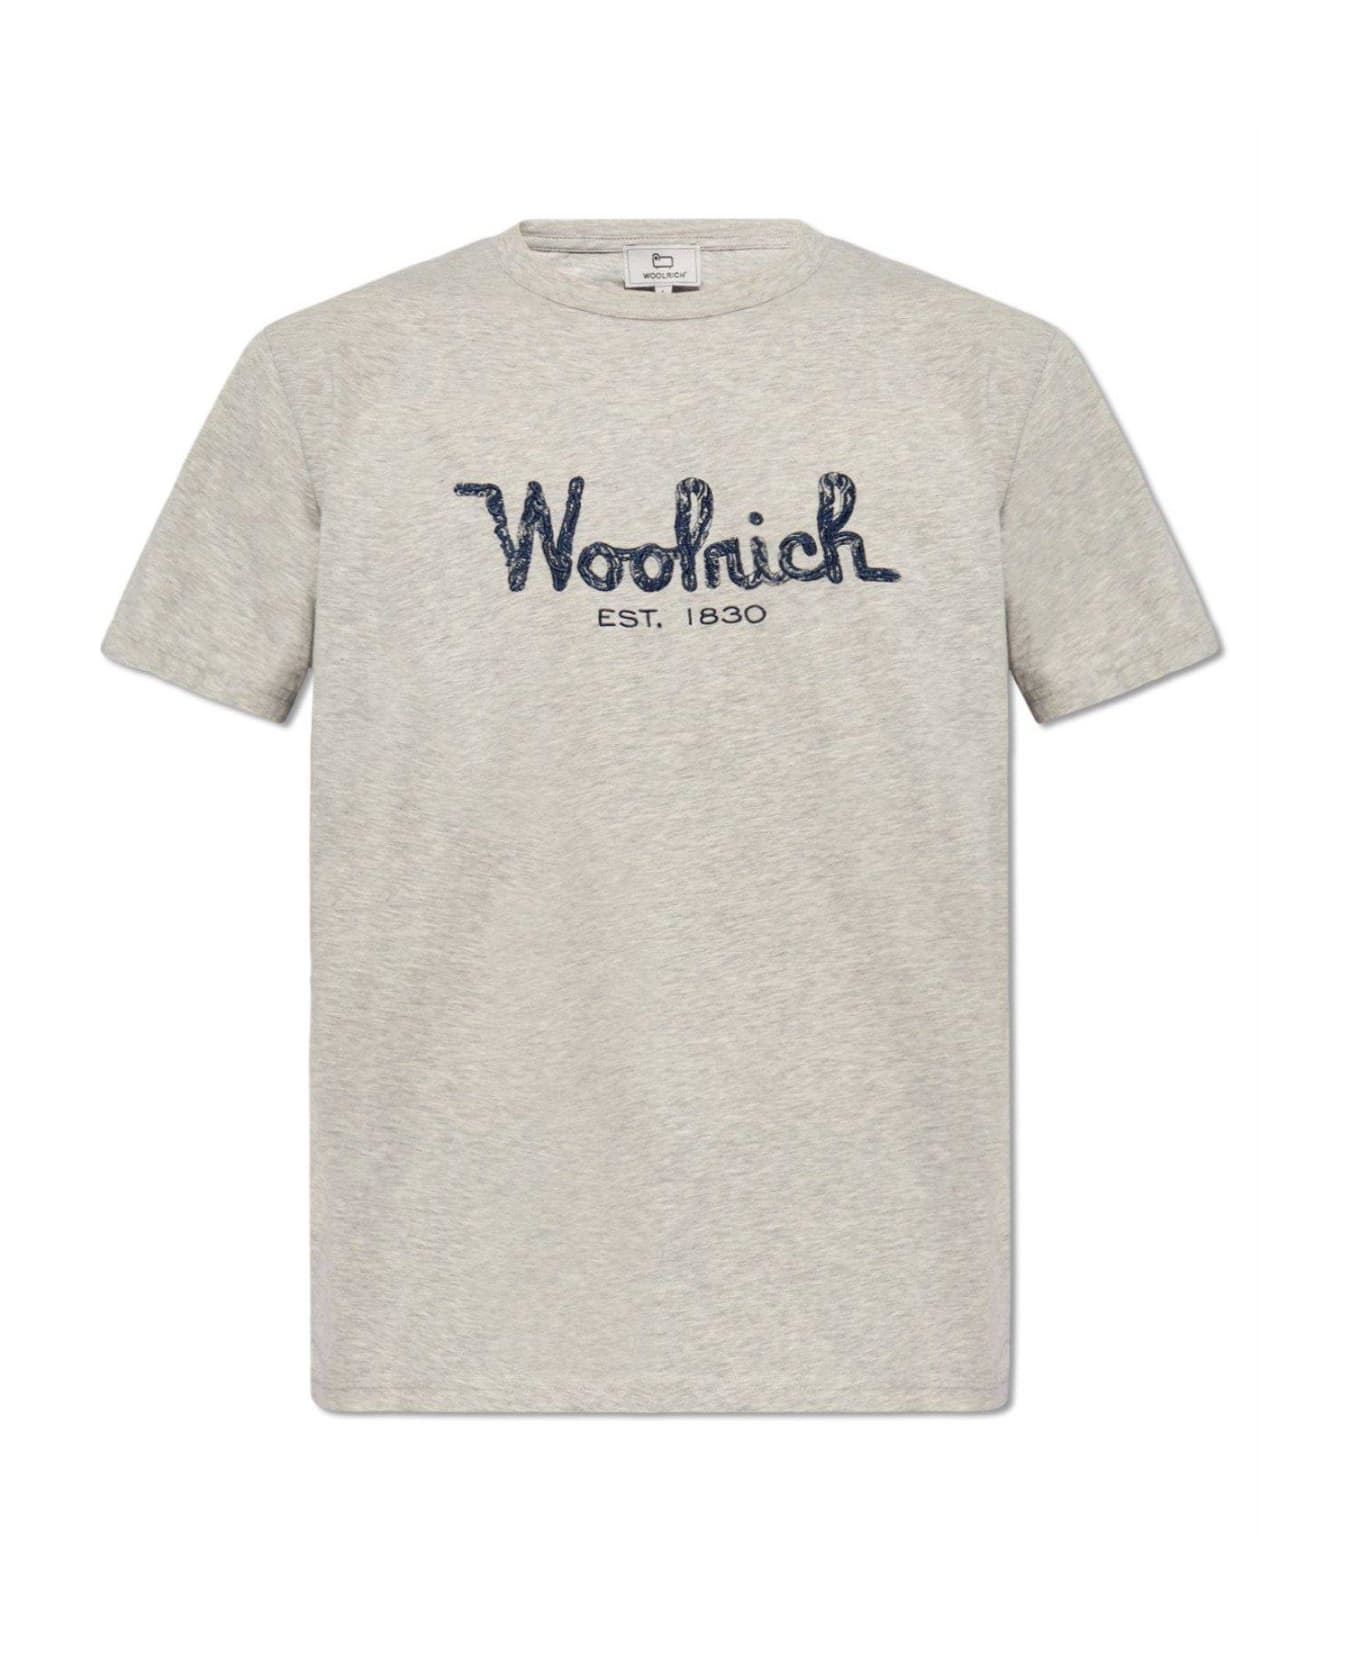 Woolrich Logo Embroidered Crewneck T-shirt - Grey